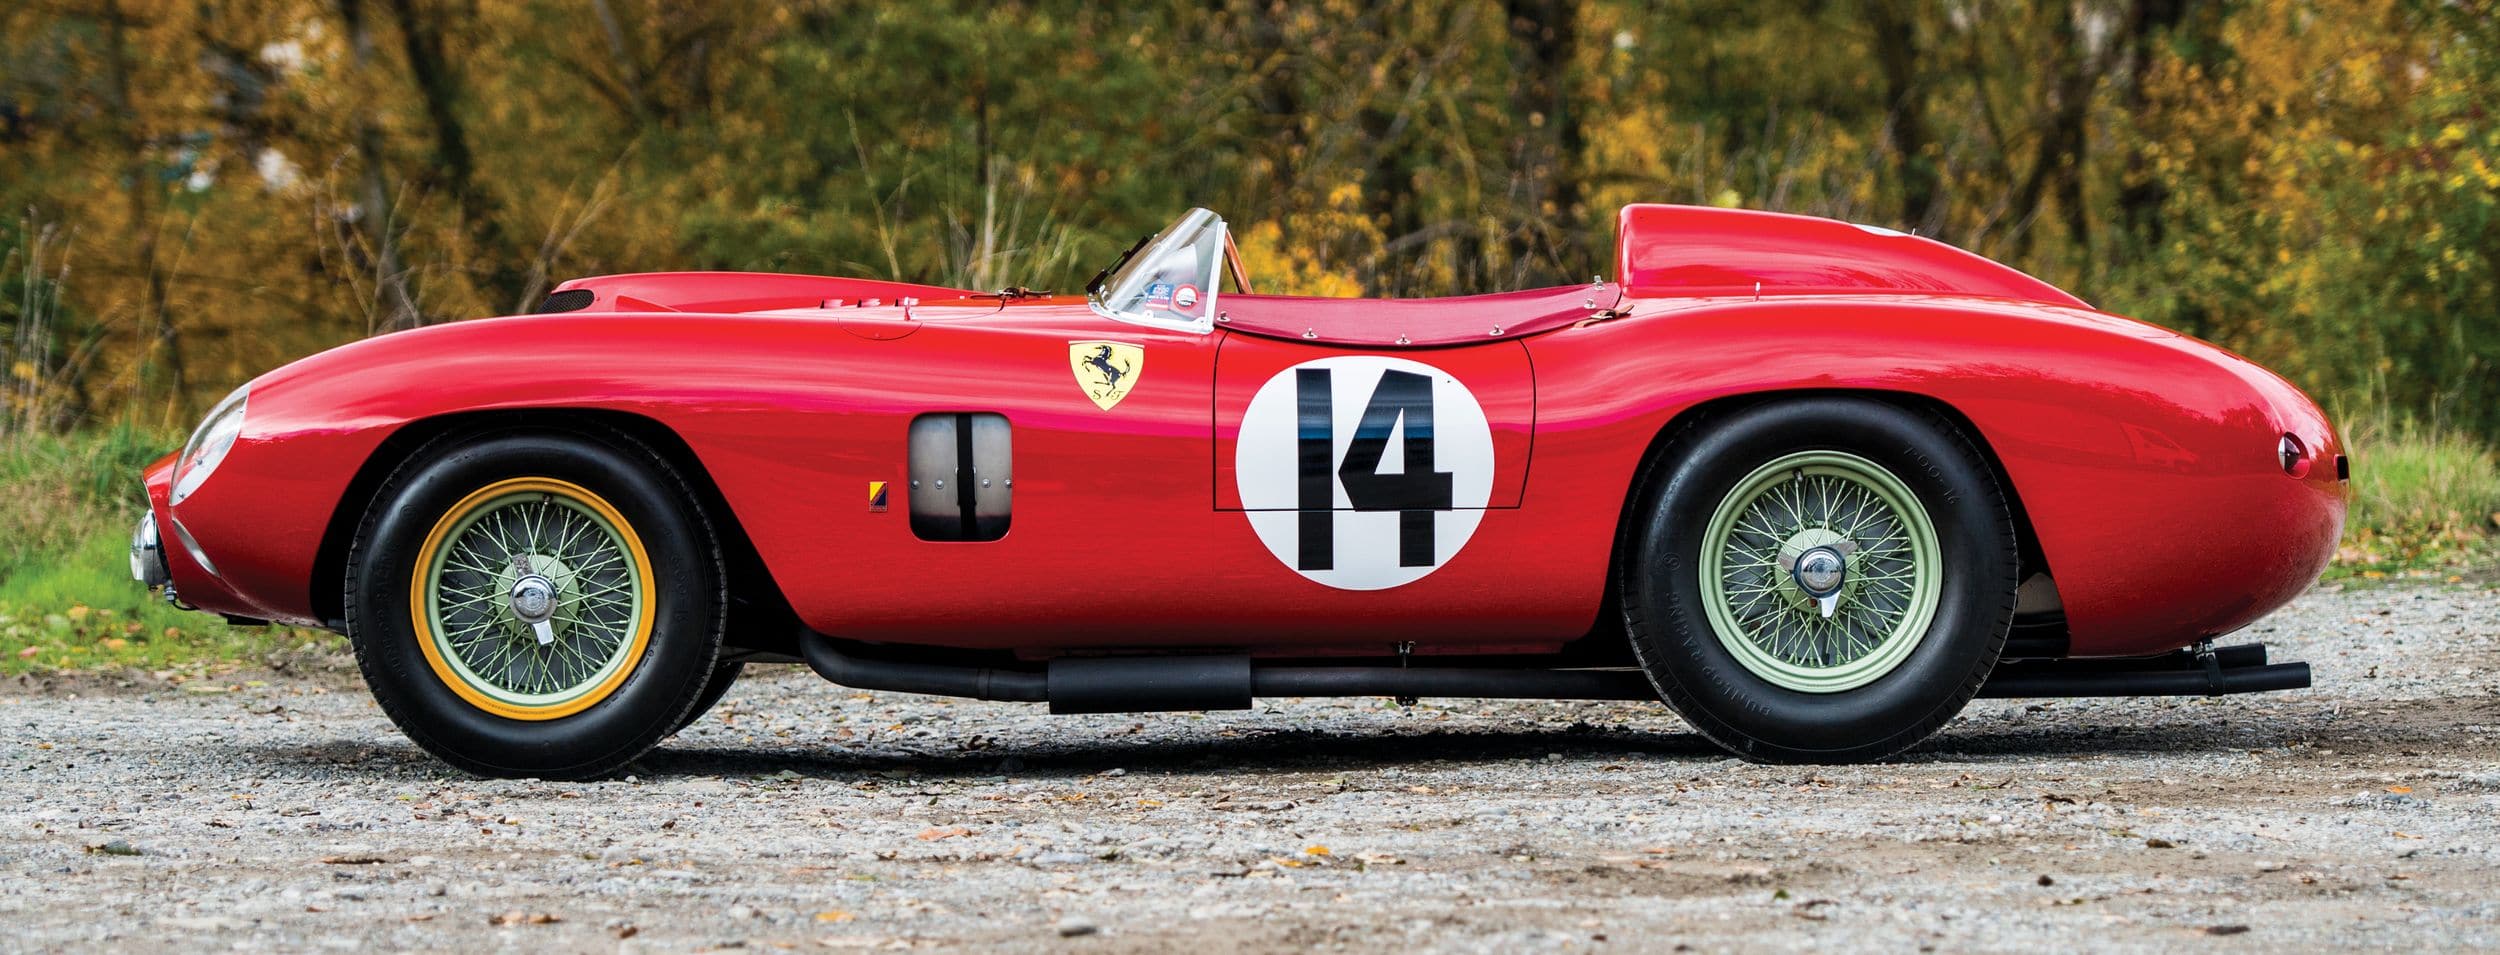 Ferrari’s 1956 290MM Scaglietti Spyder just auctioned off for US$22 million